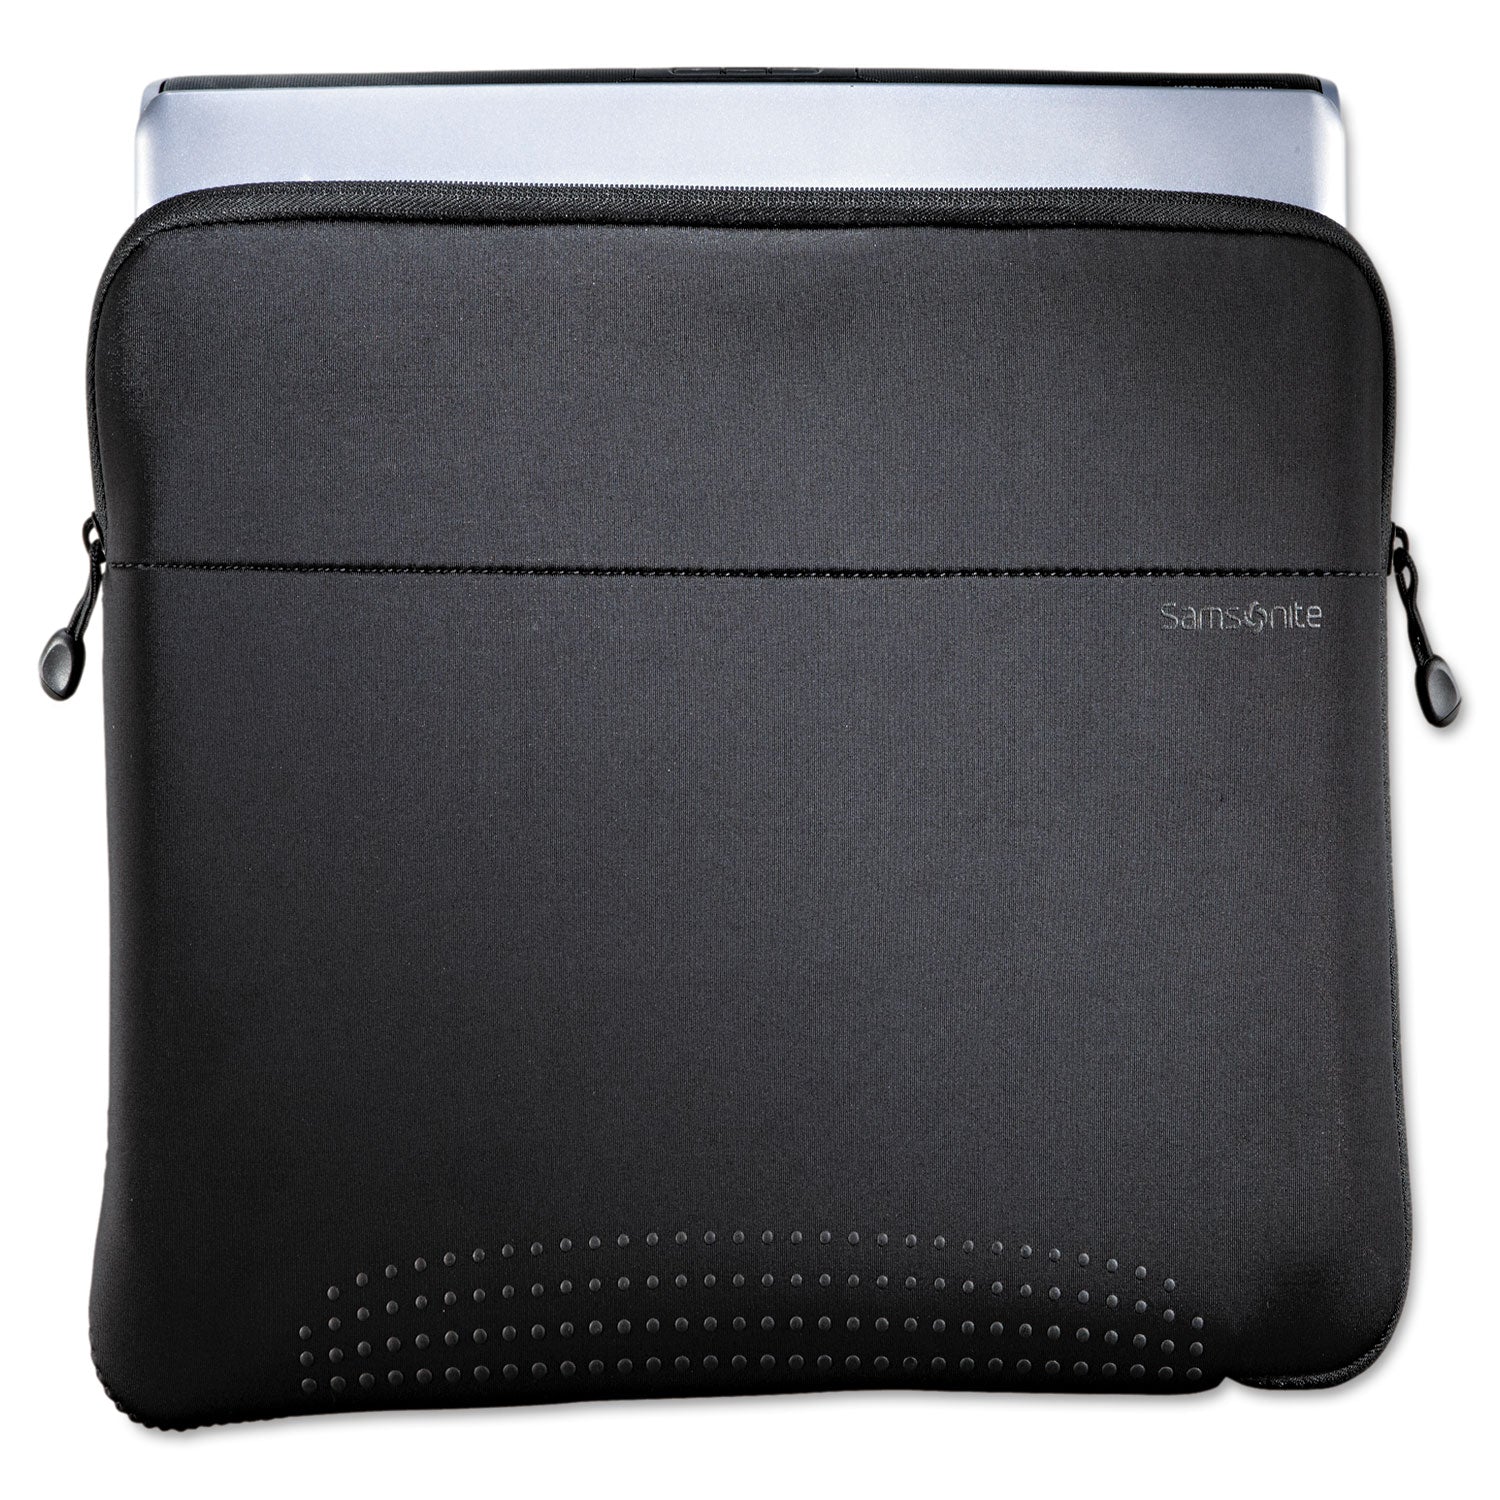 aramon-laptop-sleeve-fits-devices-up-to-156-neoprene-1575-x-1-x-105-black_sml433211041 - 3